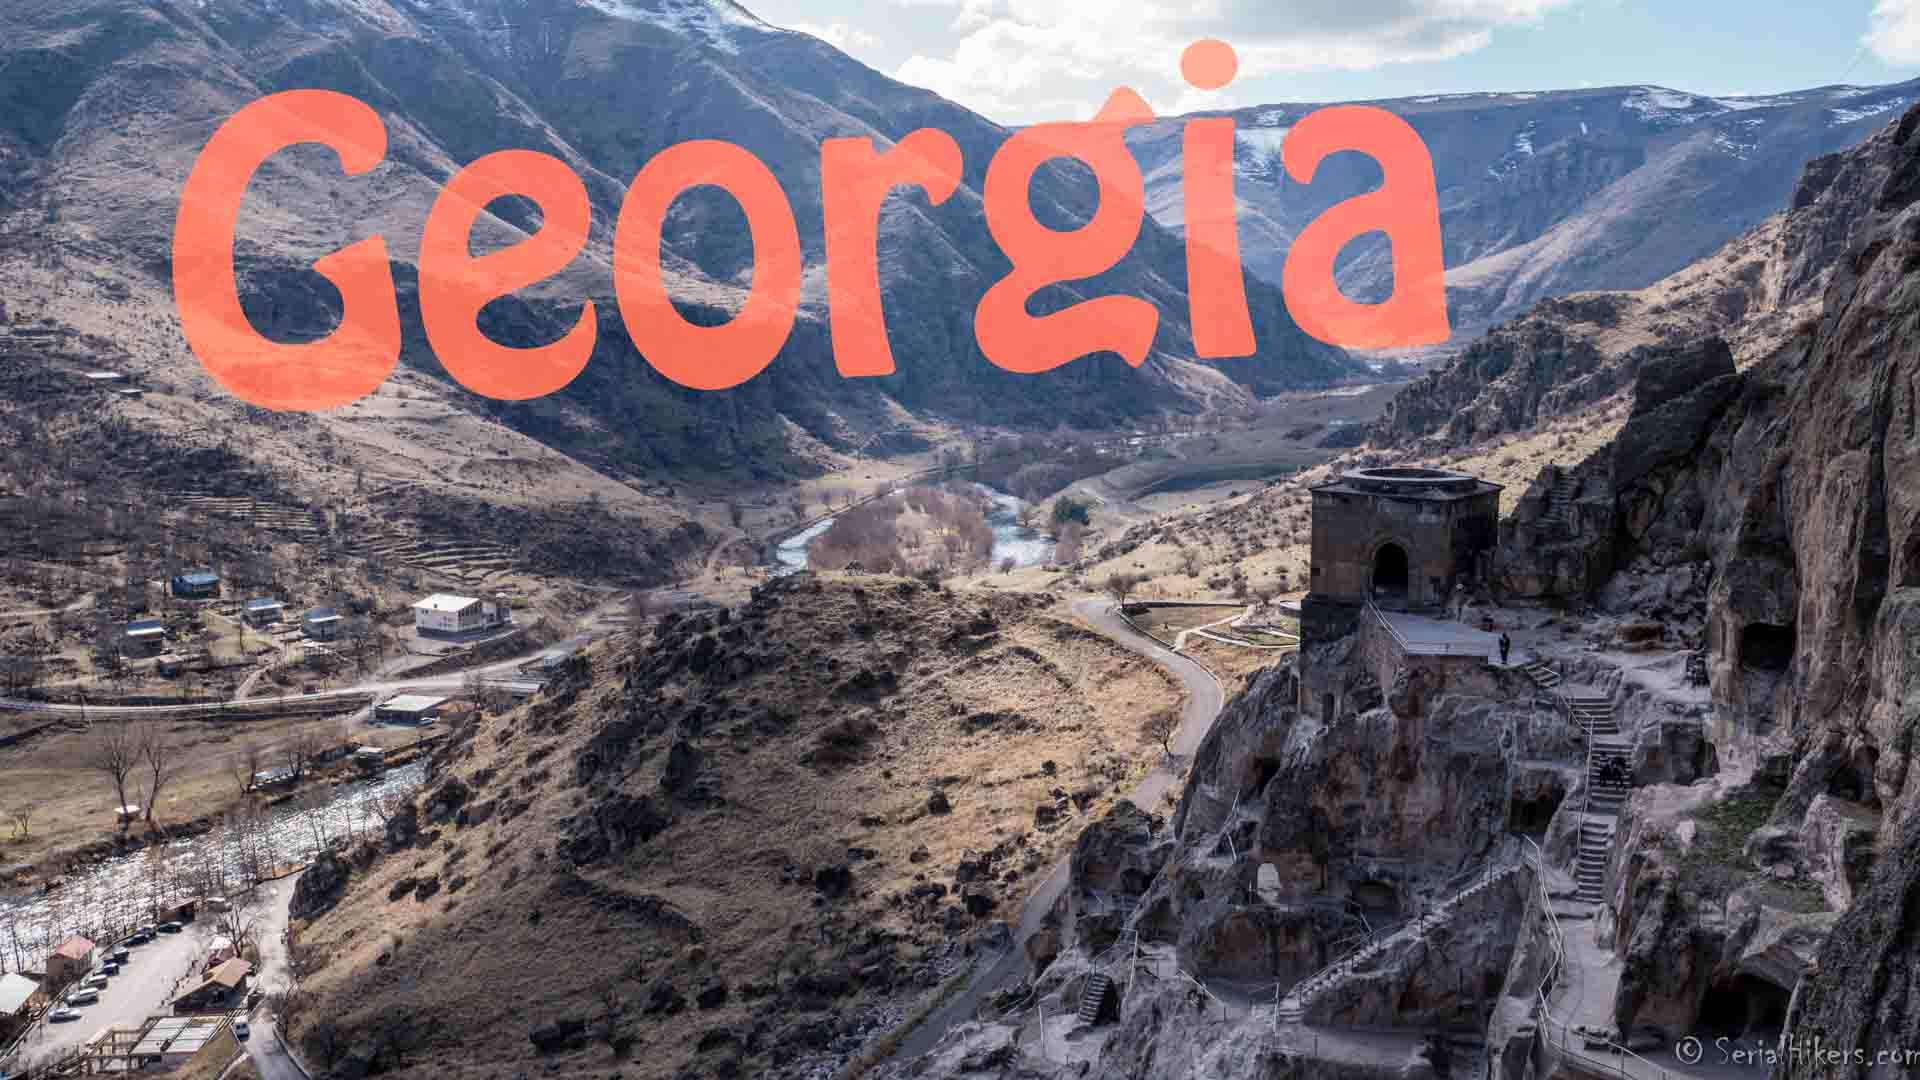 SerialHikers stop autostop world monde tour hitchhiking aventure adventure alternative travel voyage sans avion no fly caucase georgie georgia destination